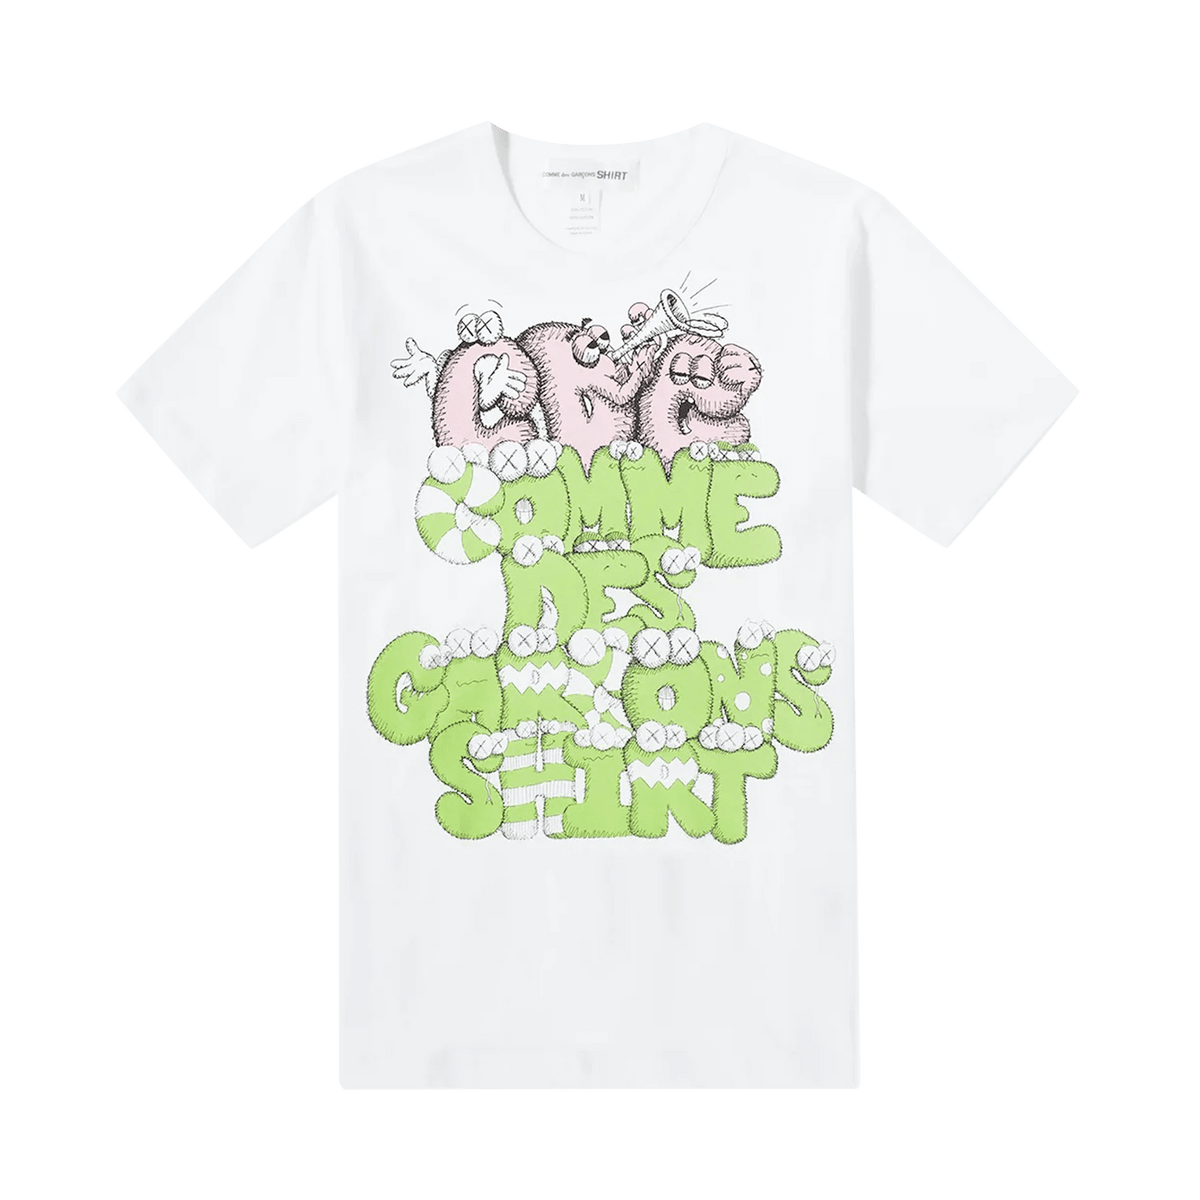 Comme des Garçons SHIRT x KAWS Print T-Shirt 'White' - JuzsportsShops